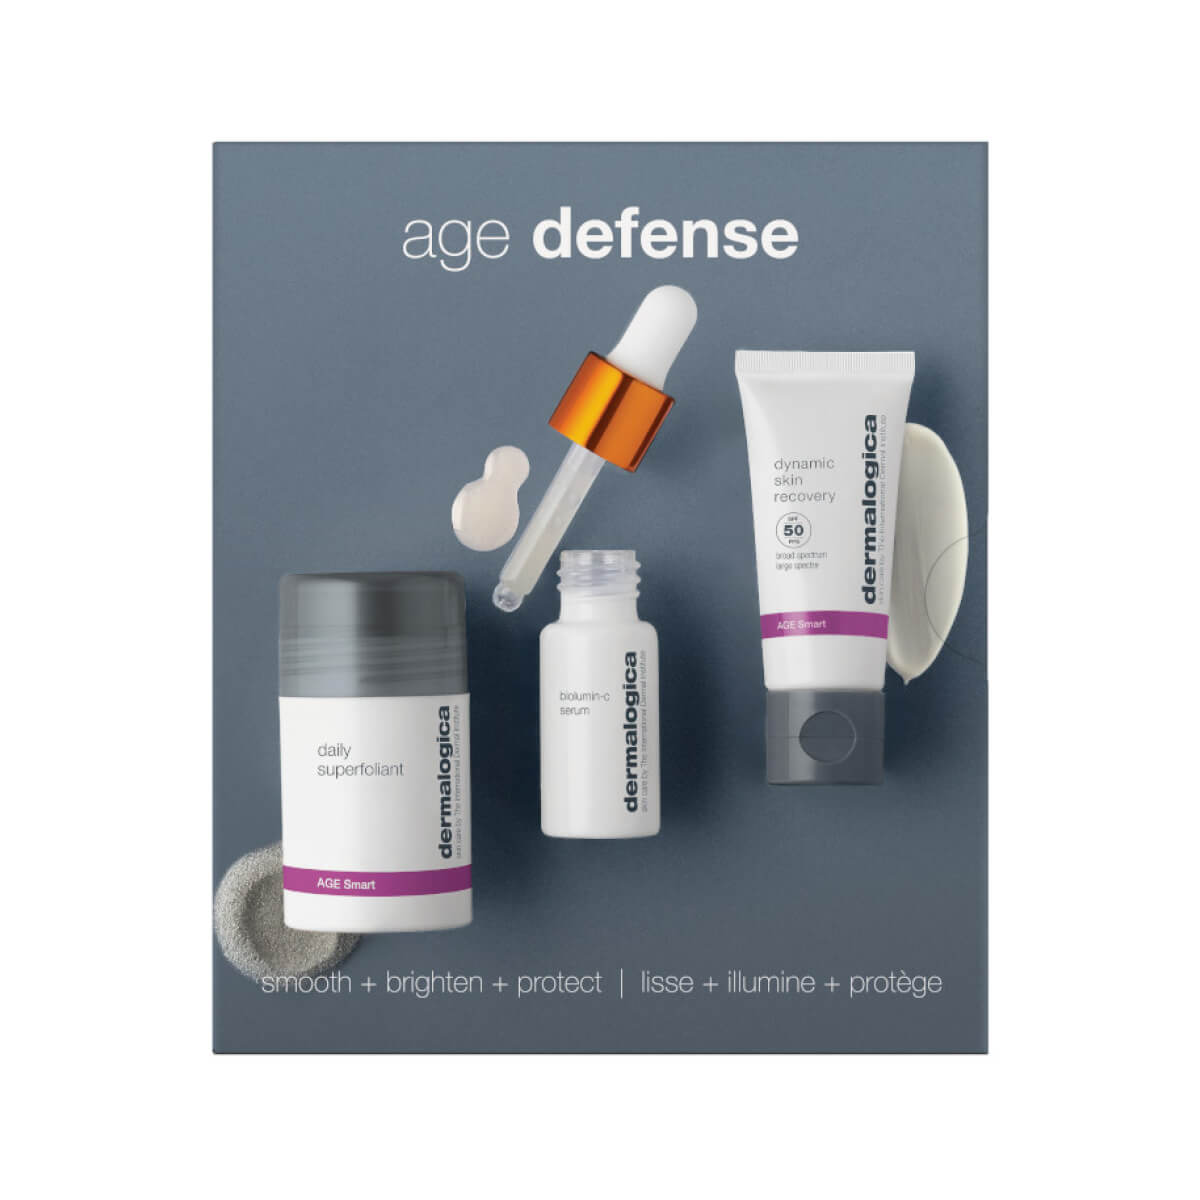 AGE defense kit